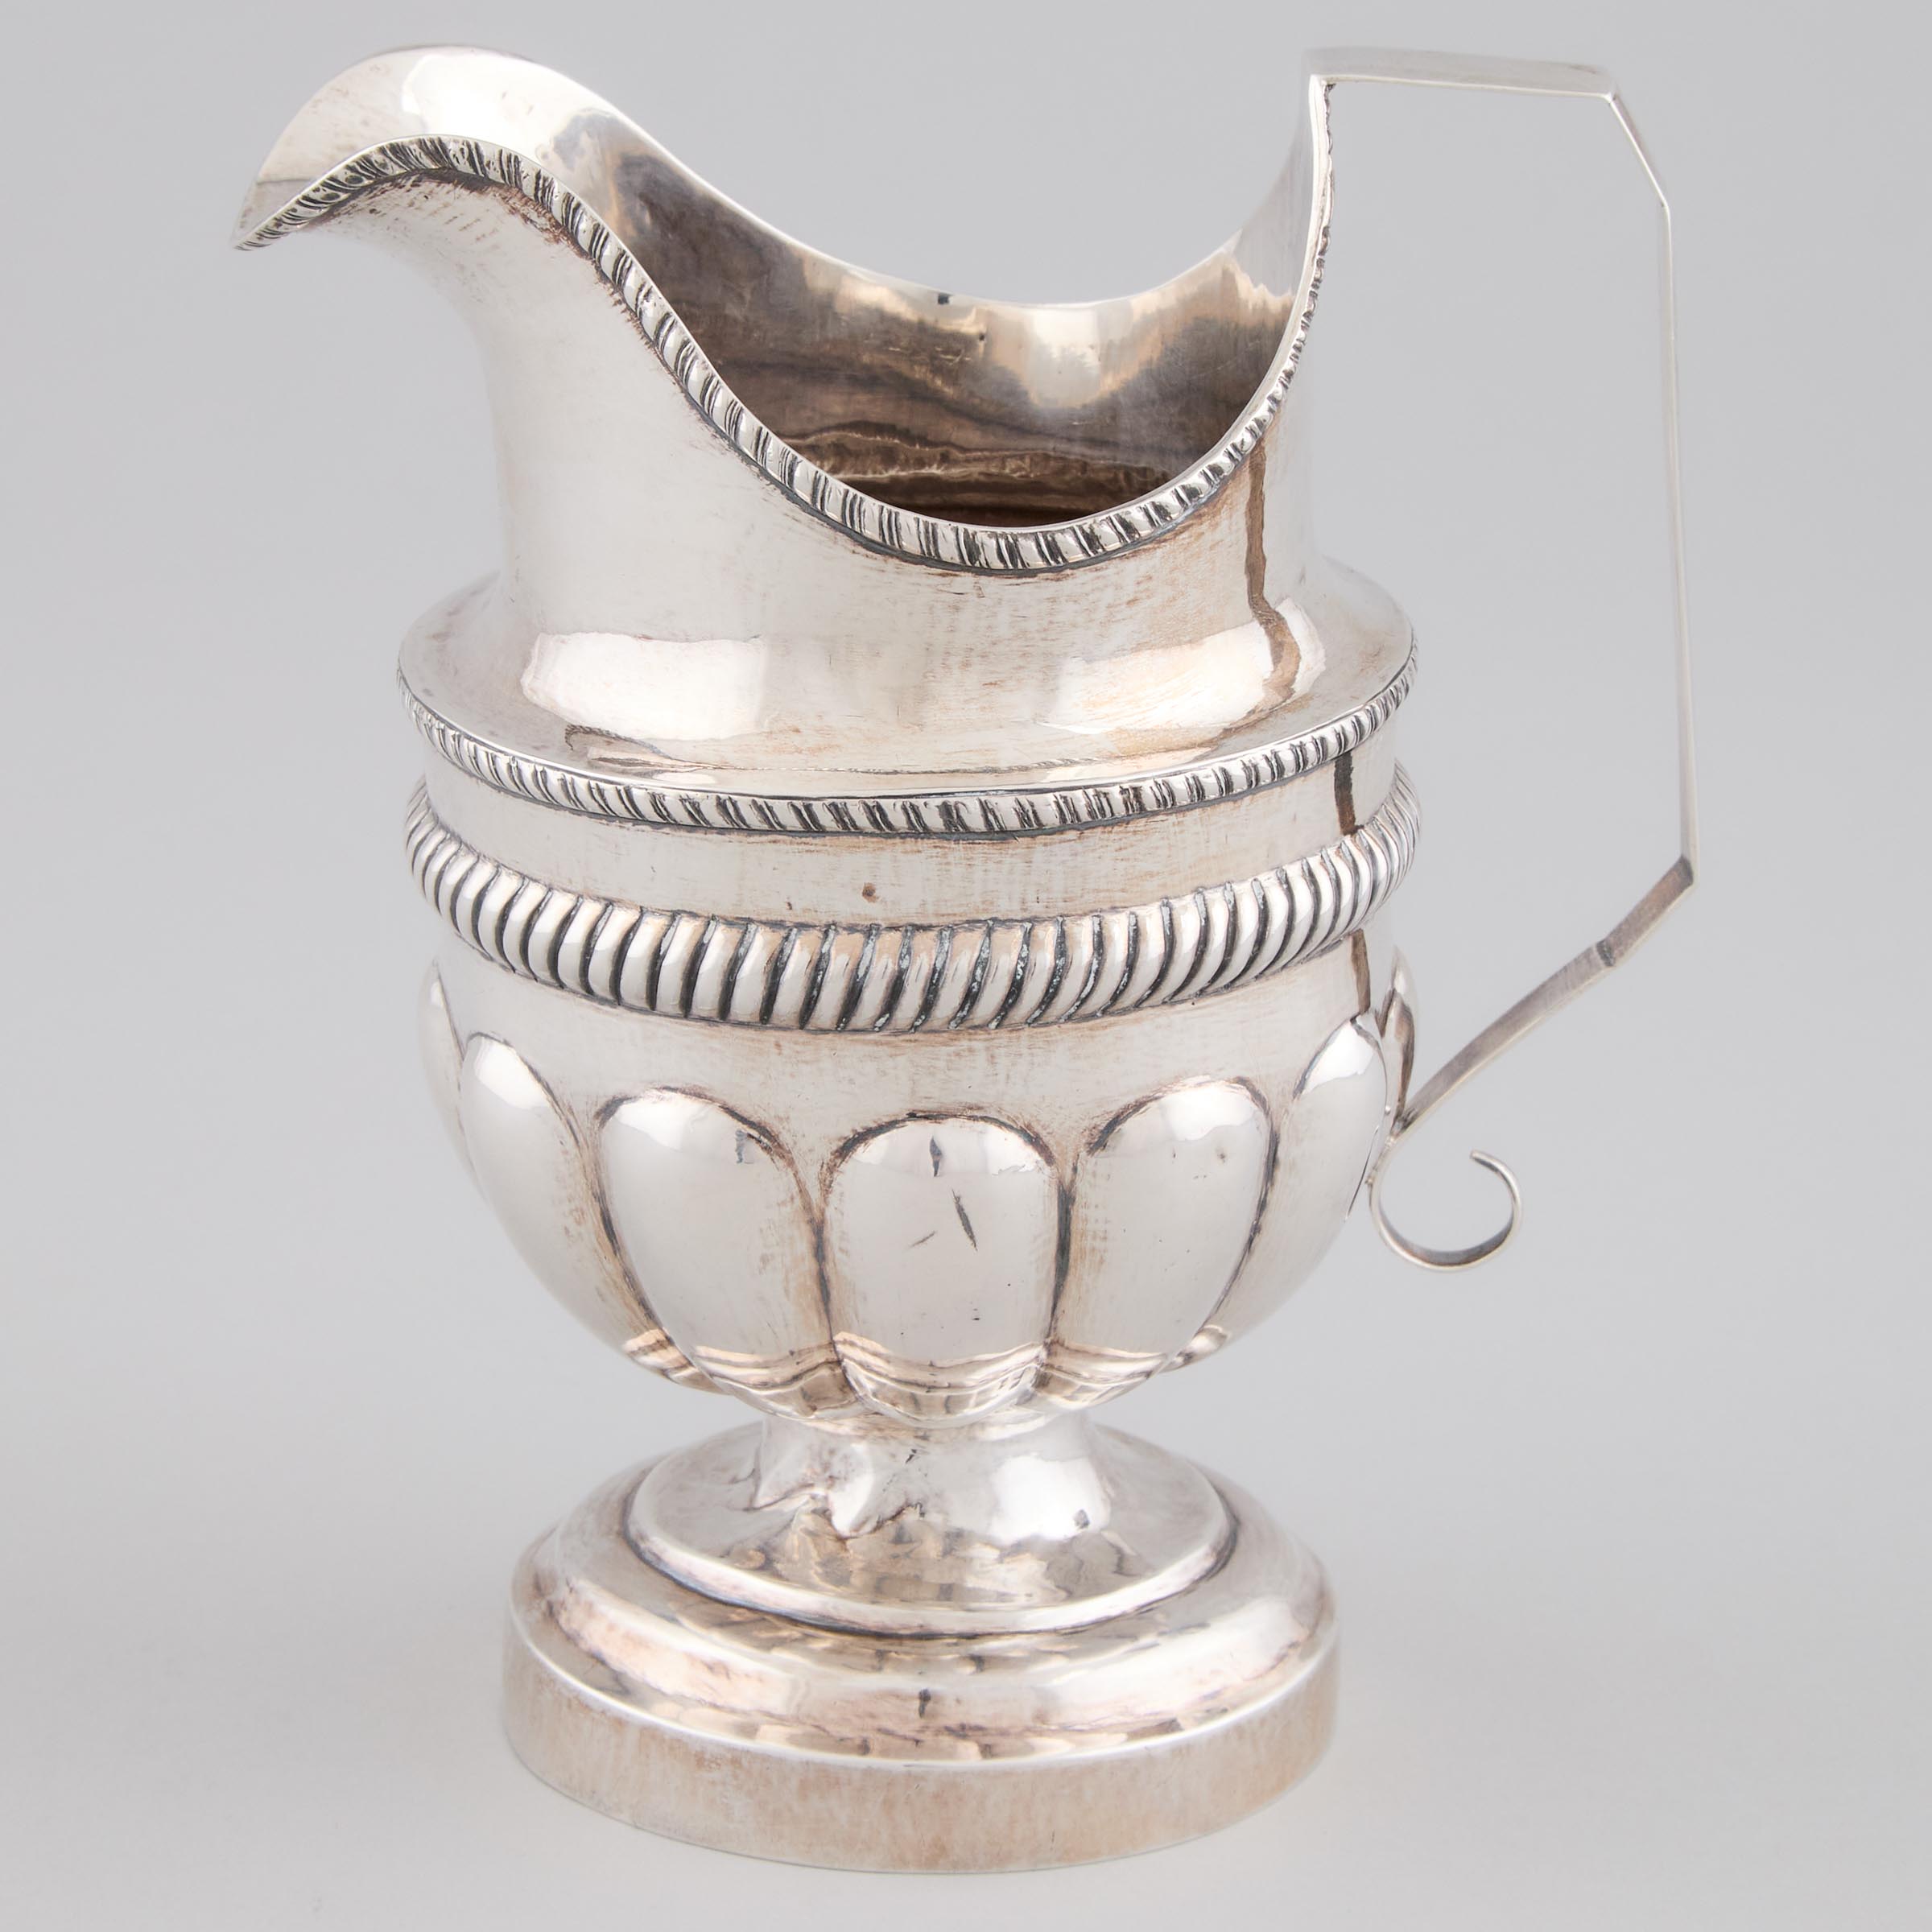 American Silver Cream Jug, early 19th